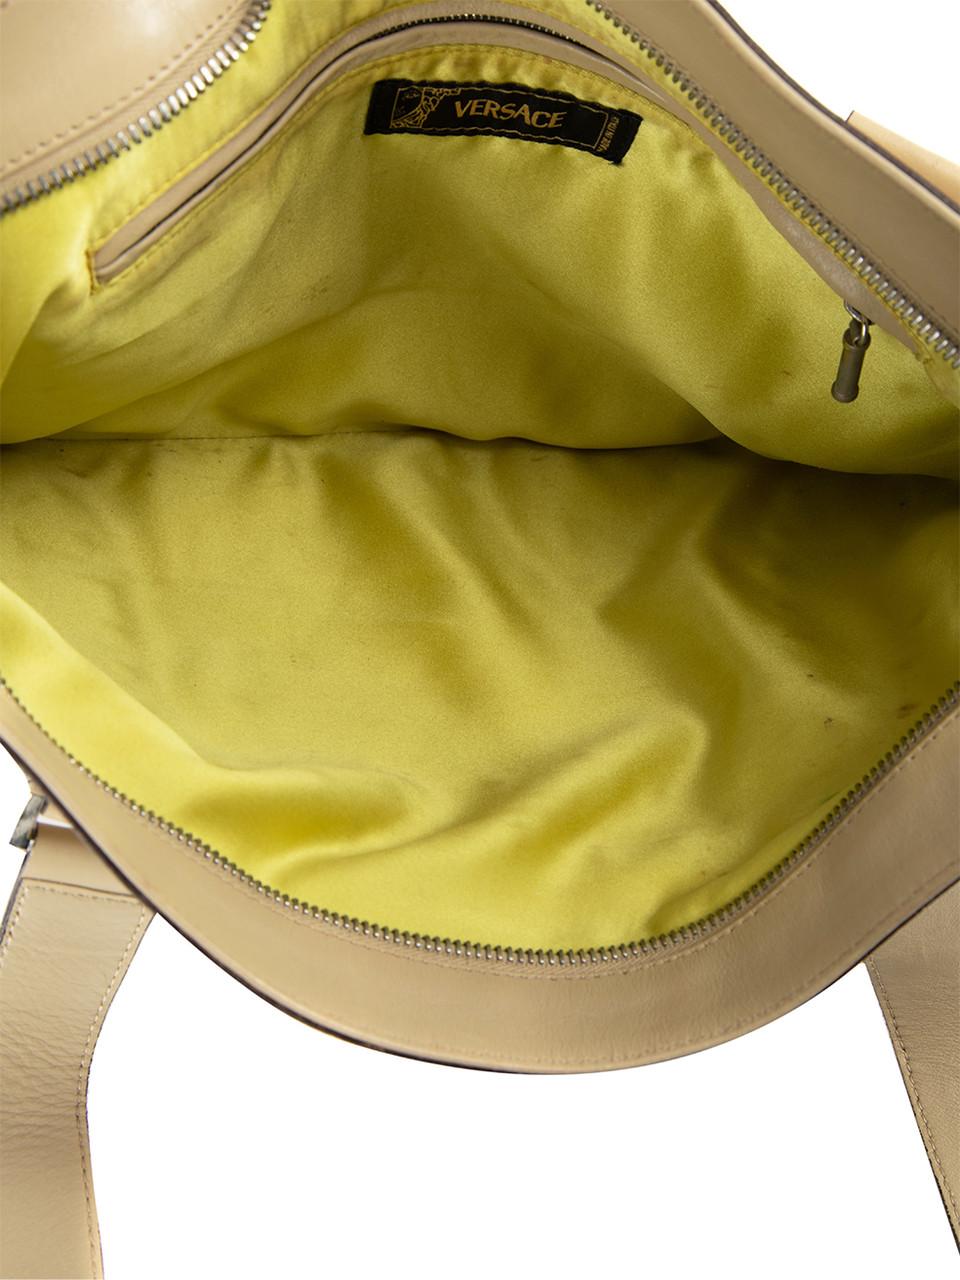 Versace Women's Cream Leather Panelled Shoulder Bag 2